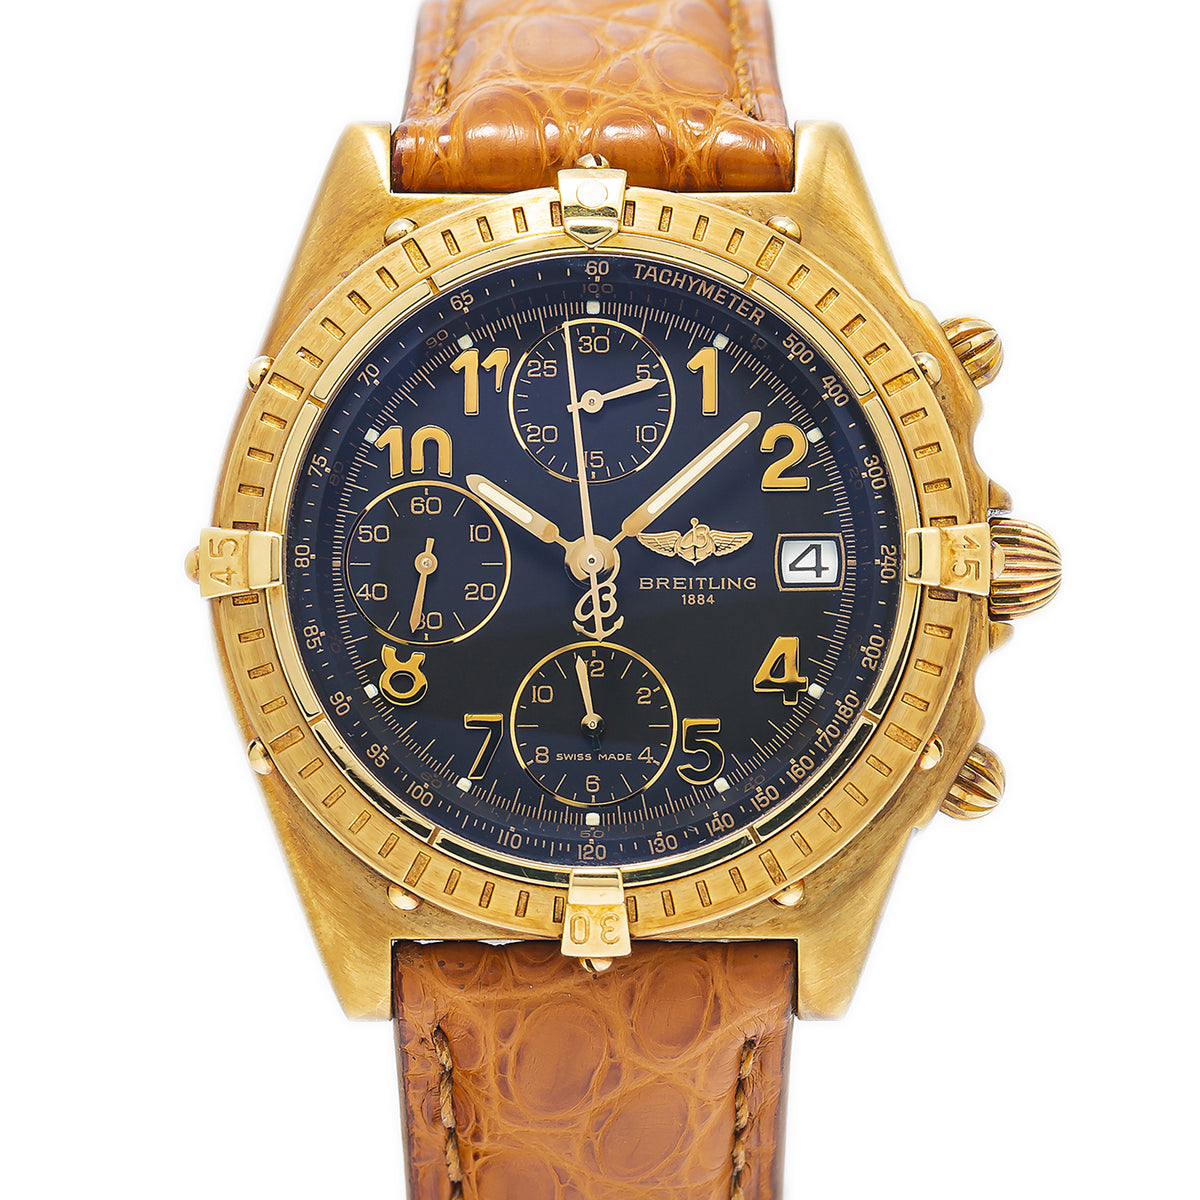 Breitling Chronomat K13048 1996 Complete UNPOLISHED 18k Black Dial Watch 40mm